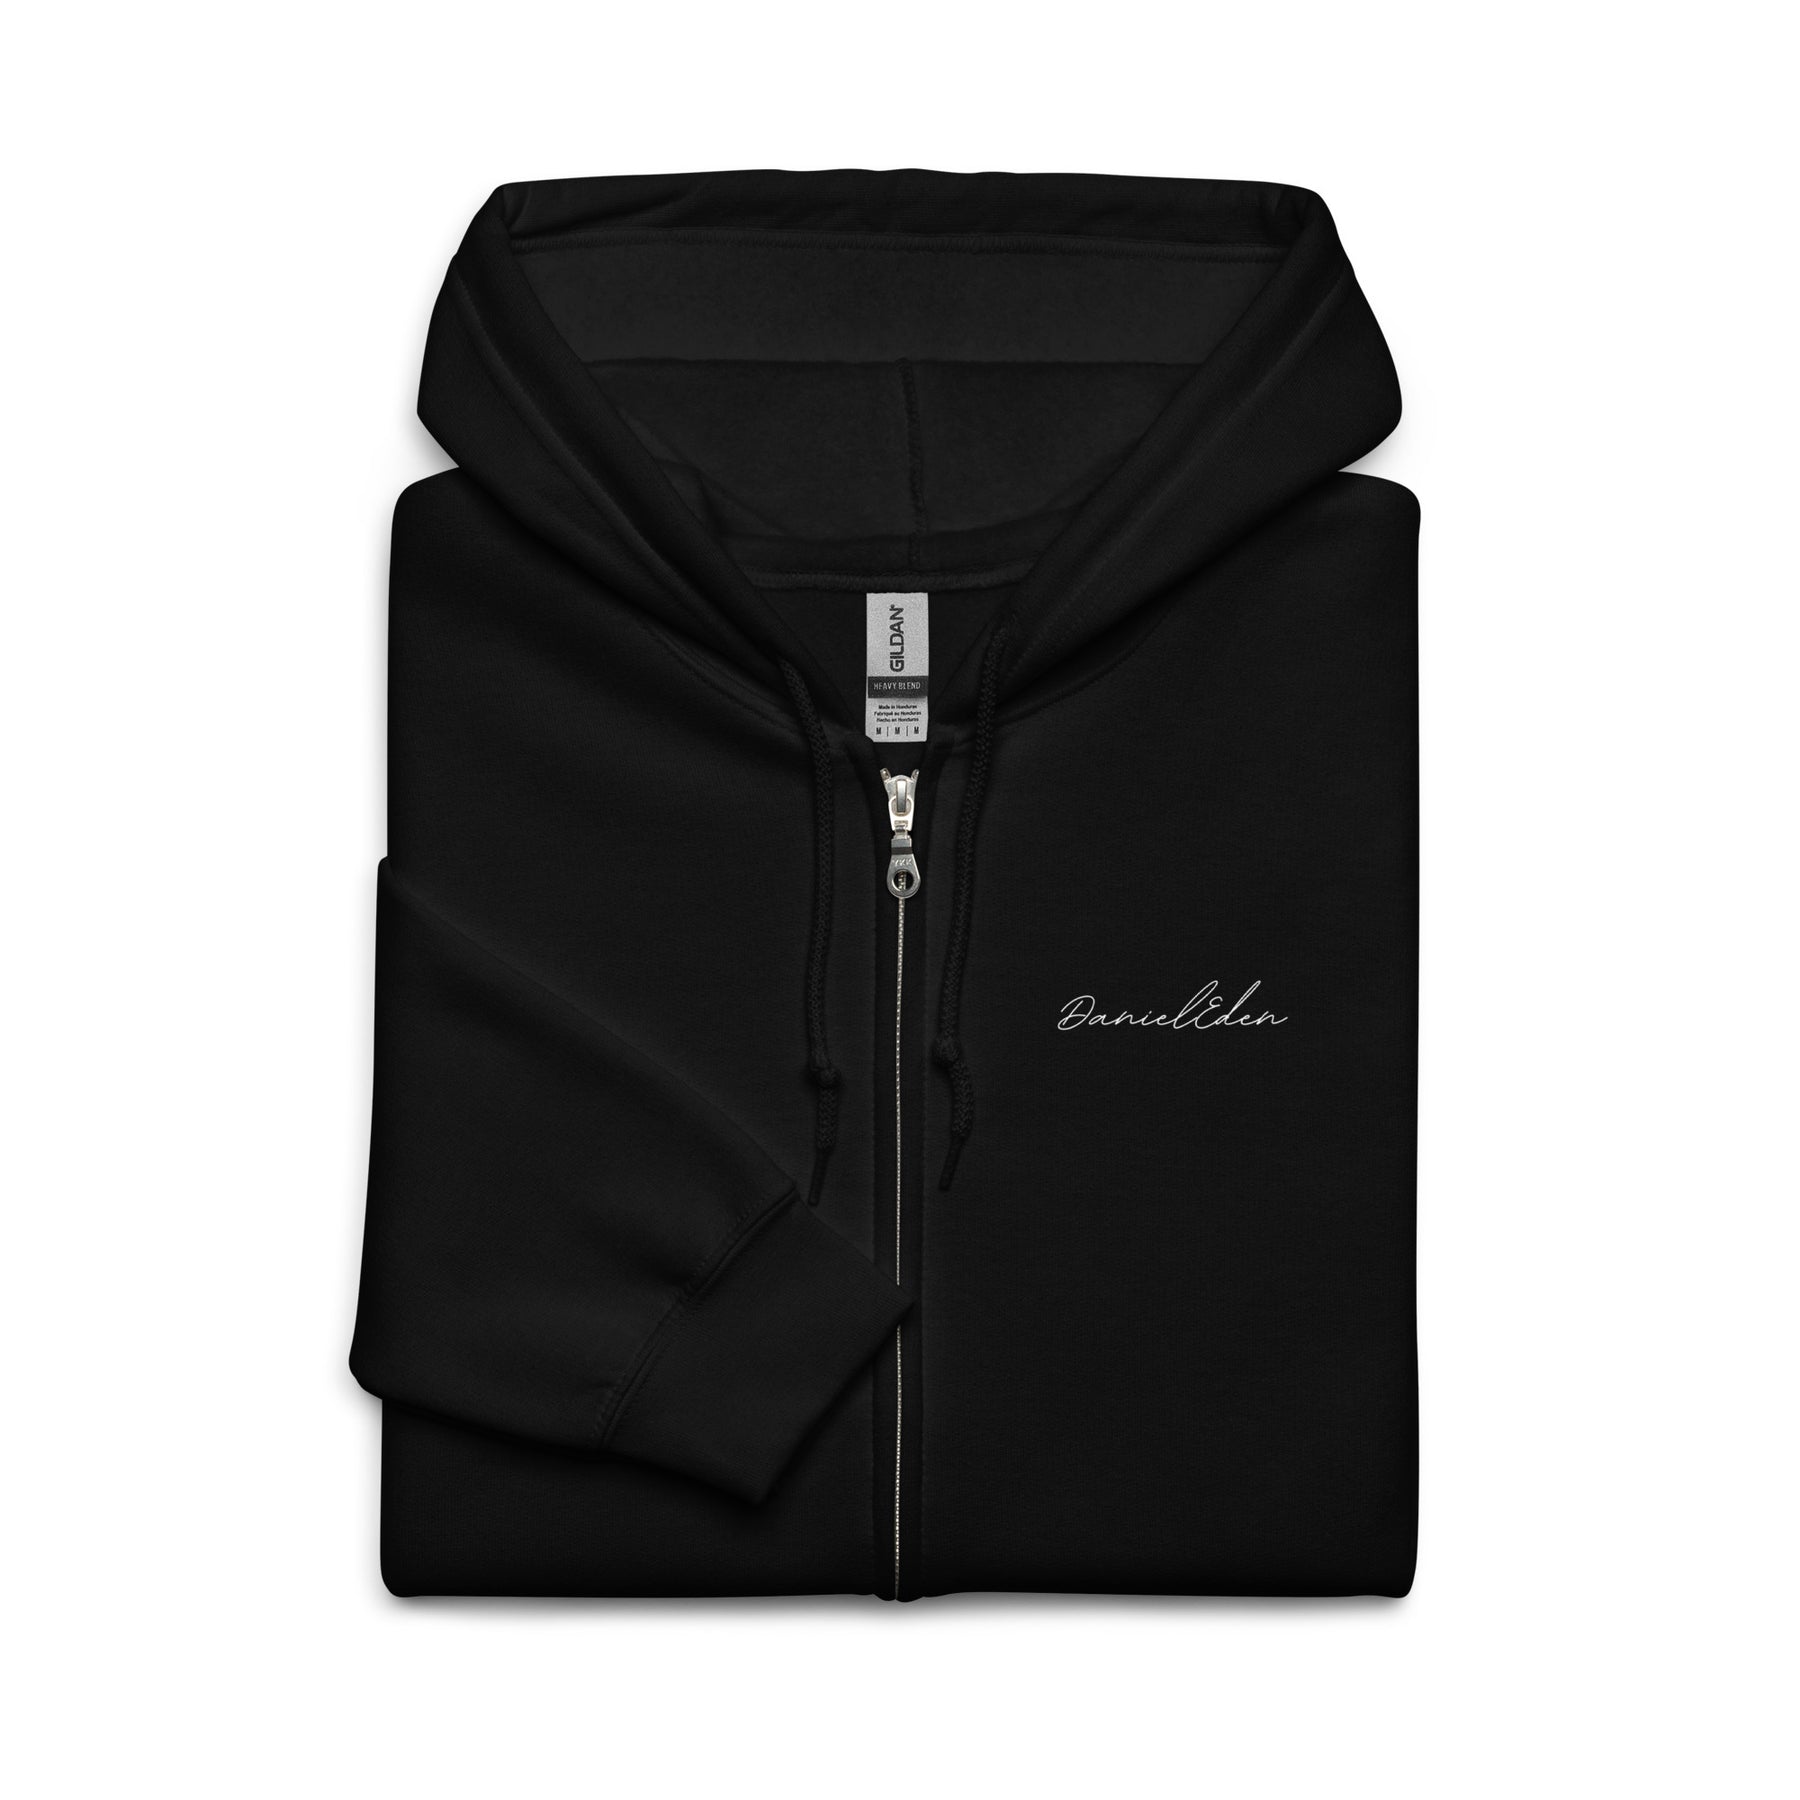 DanielEden premium hoodie "ONE"